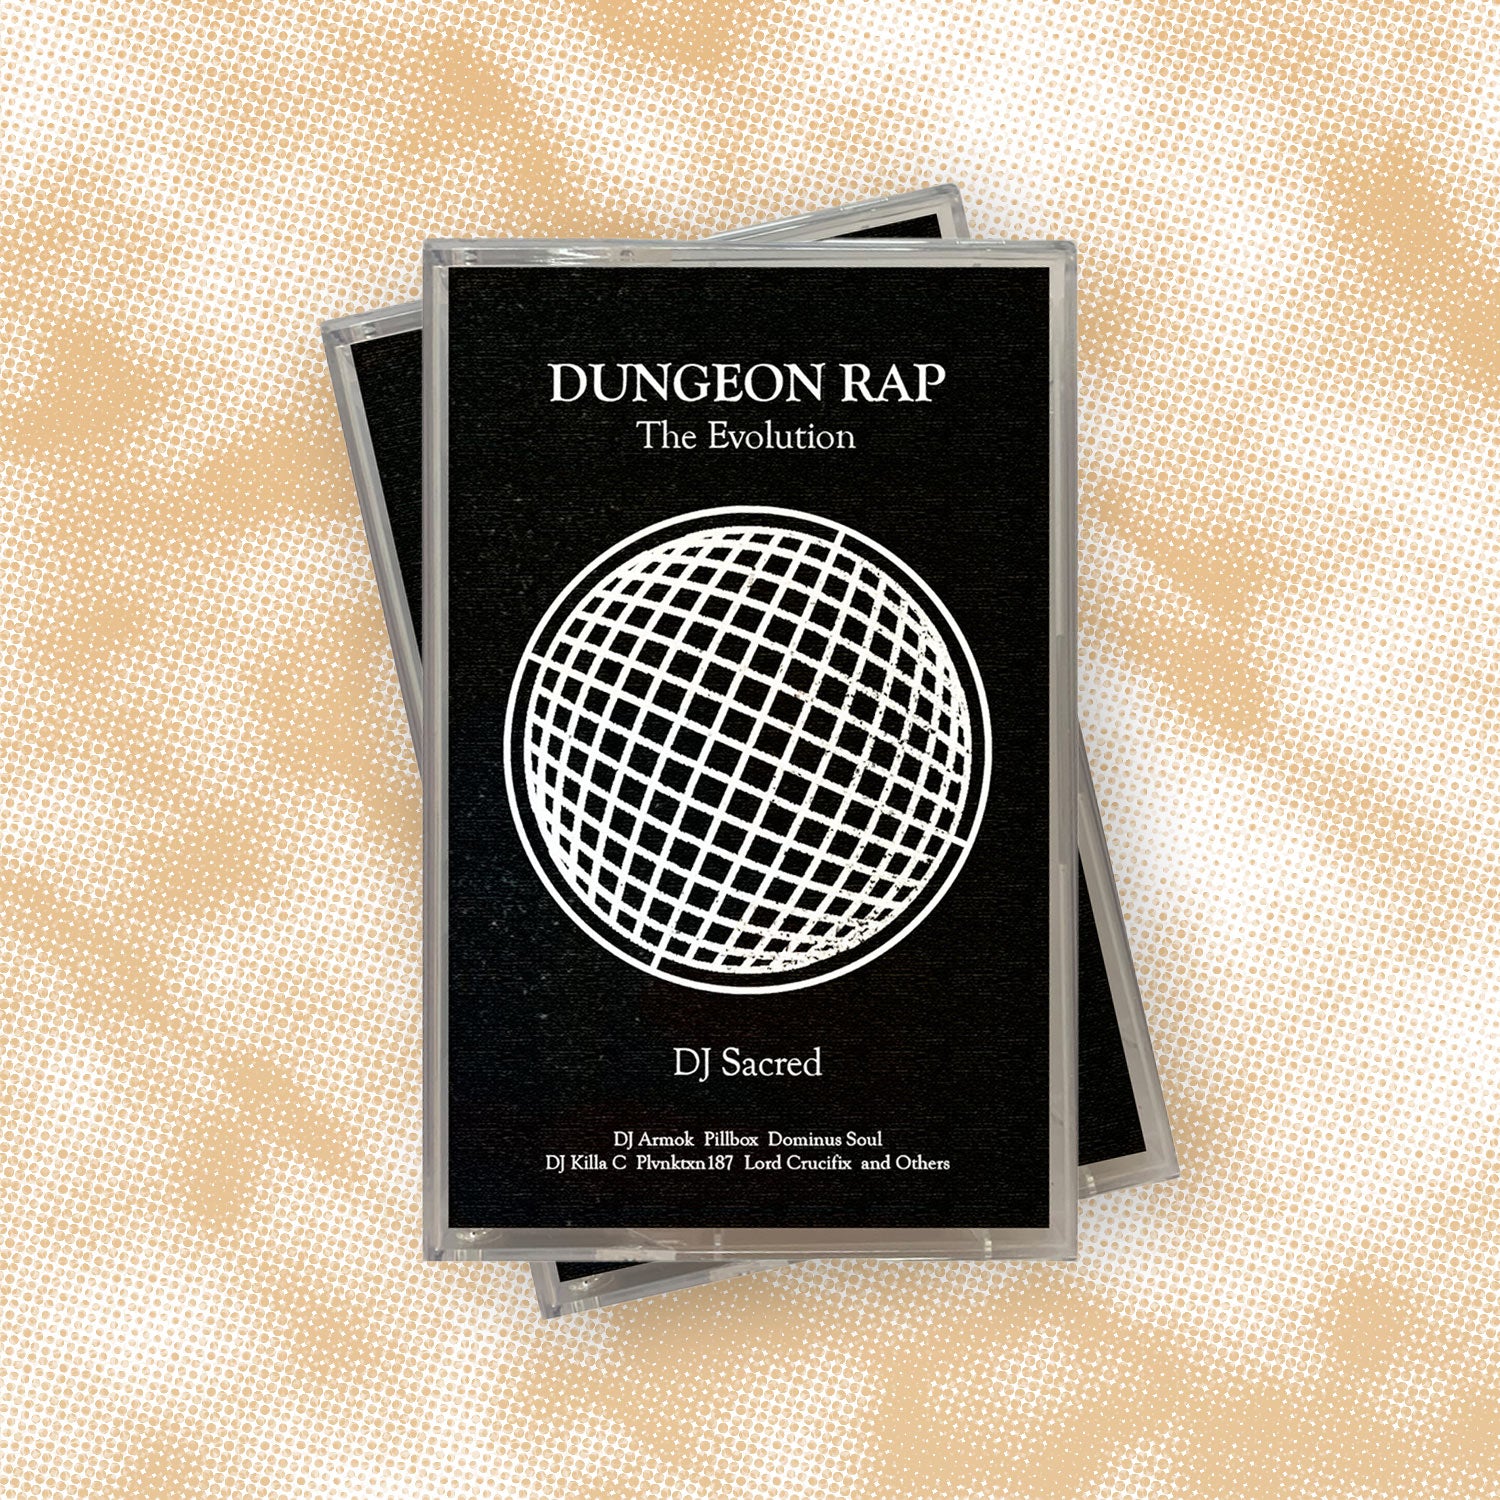 V/A - Dungeon Rap: The Evolution